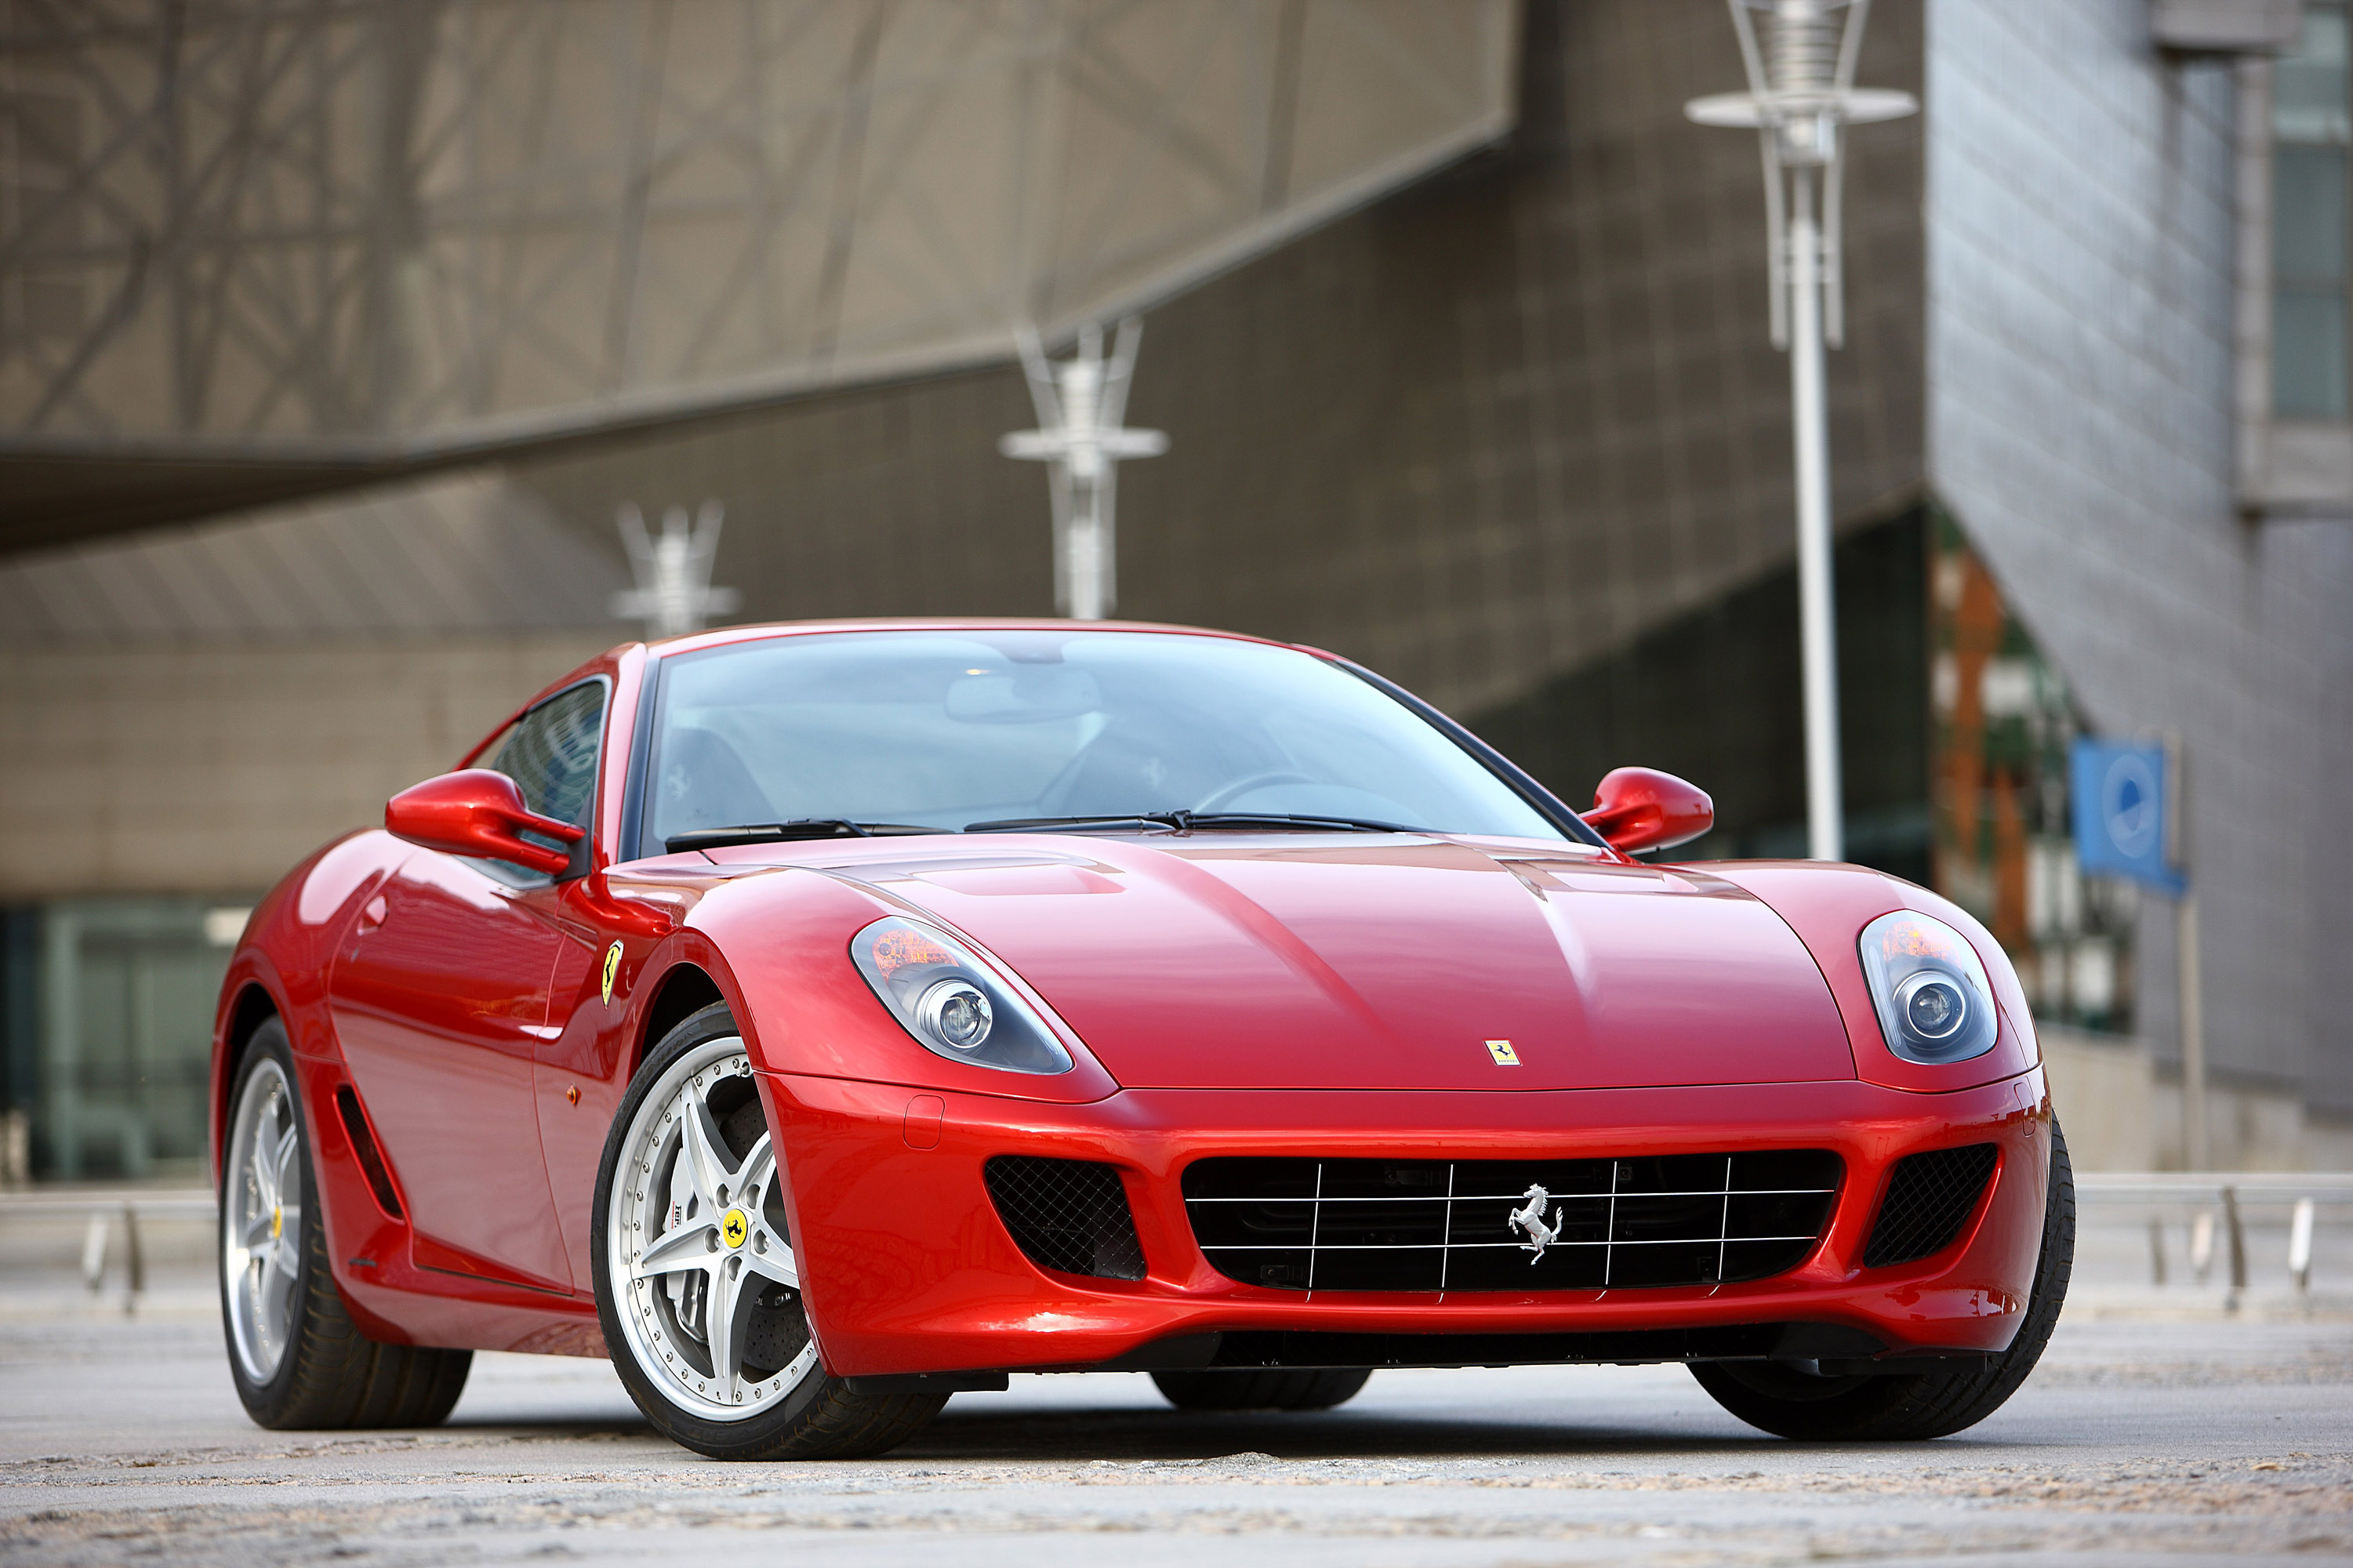 Красный ferrari. Ferrari 599 GTB. Ferrari 599 GTB HGTE. Феррари 599 GTB красная. Фото Ferrari 599 GTB.